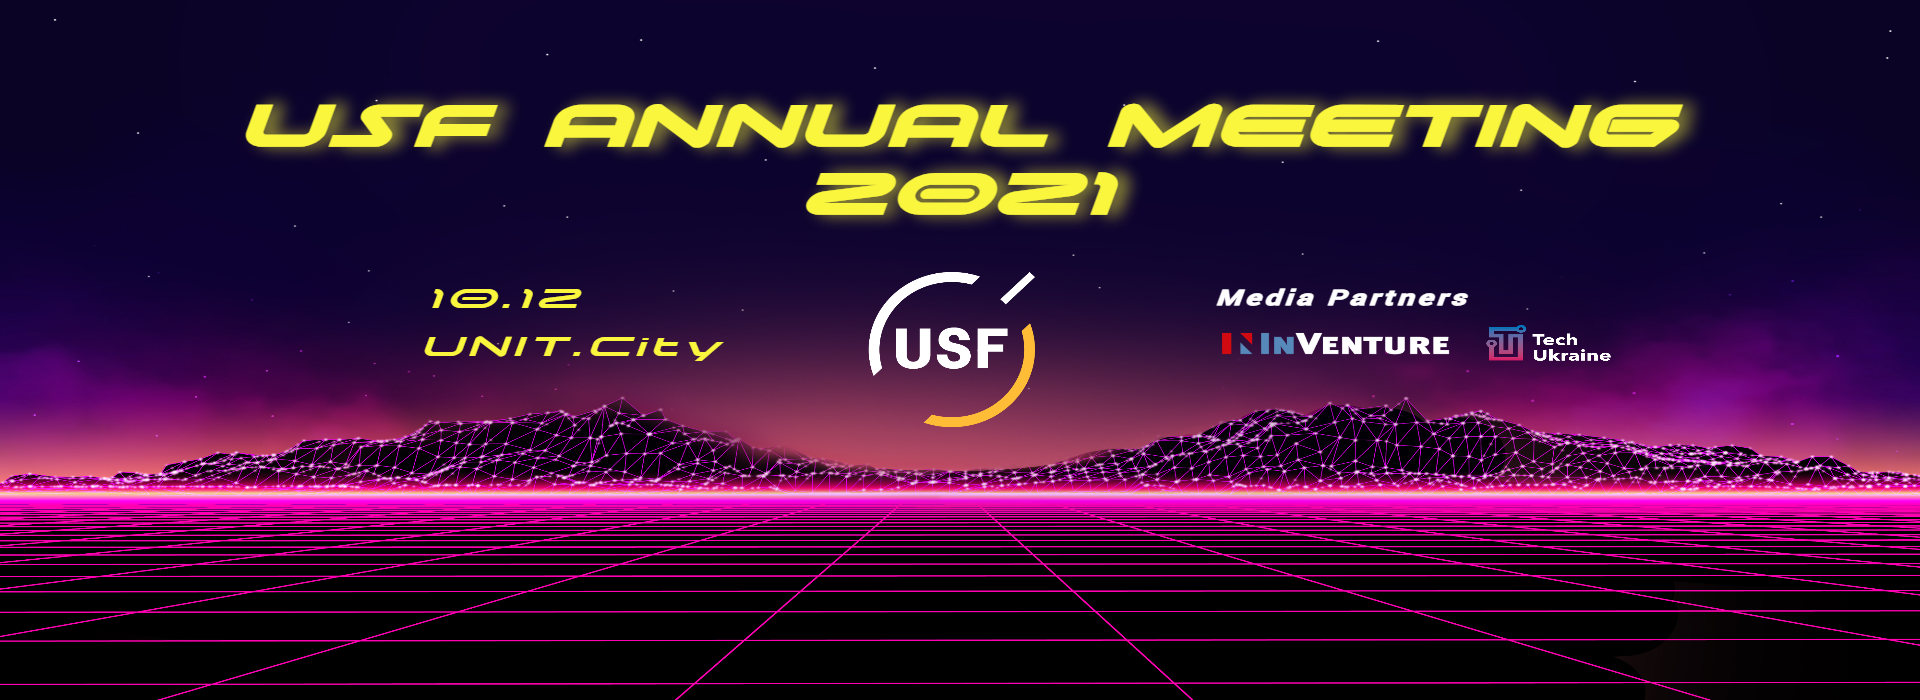 USF Annual Meeting 2021